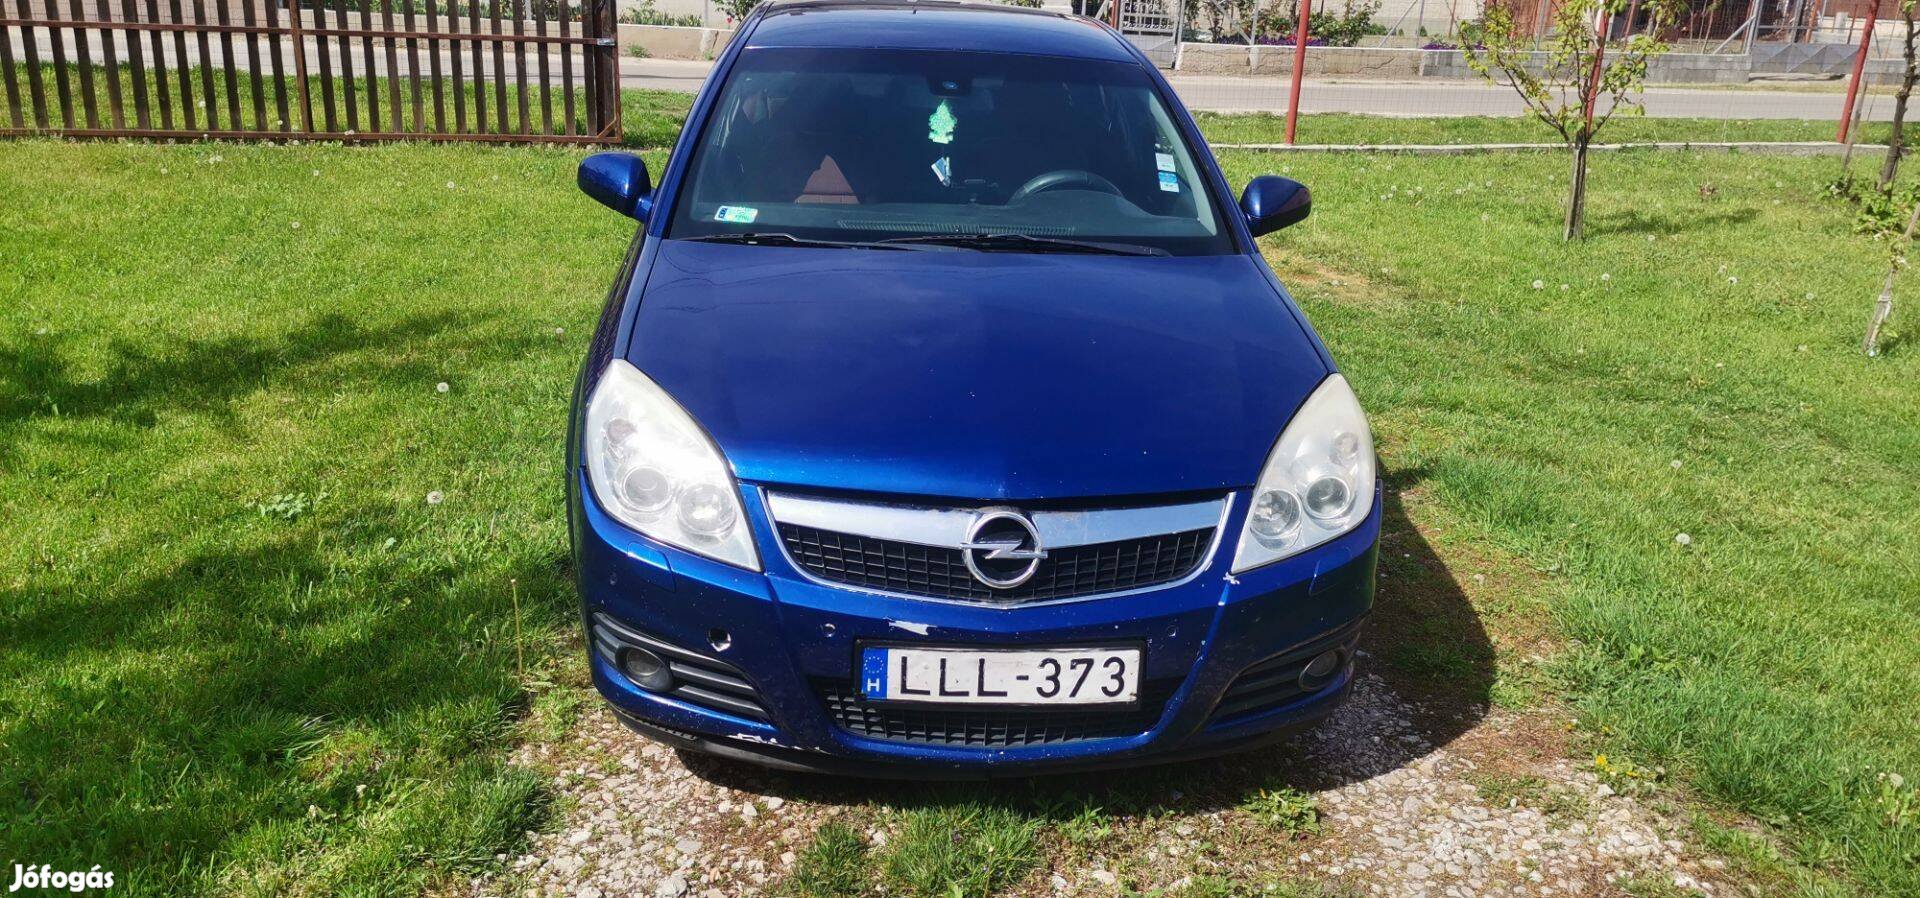 Opel vectra c 1.9 cdti